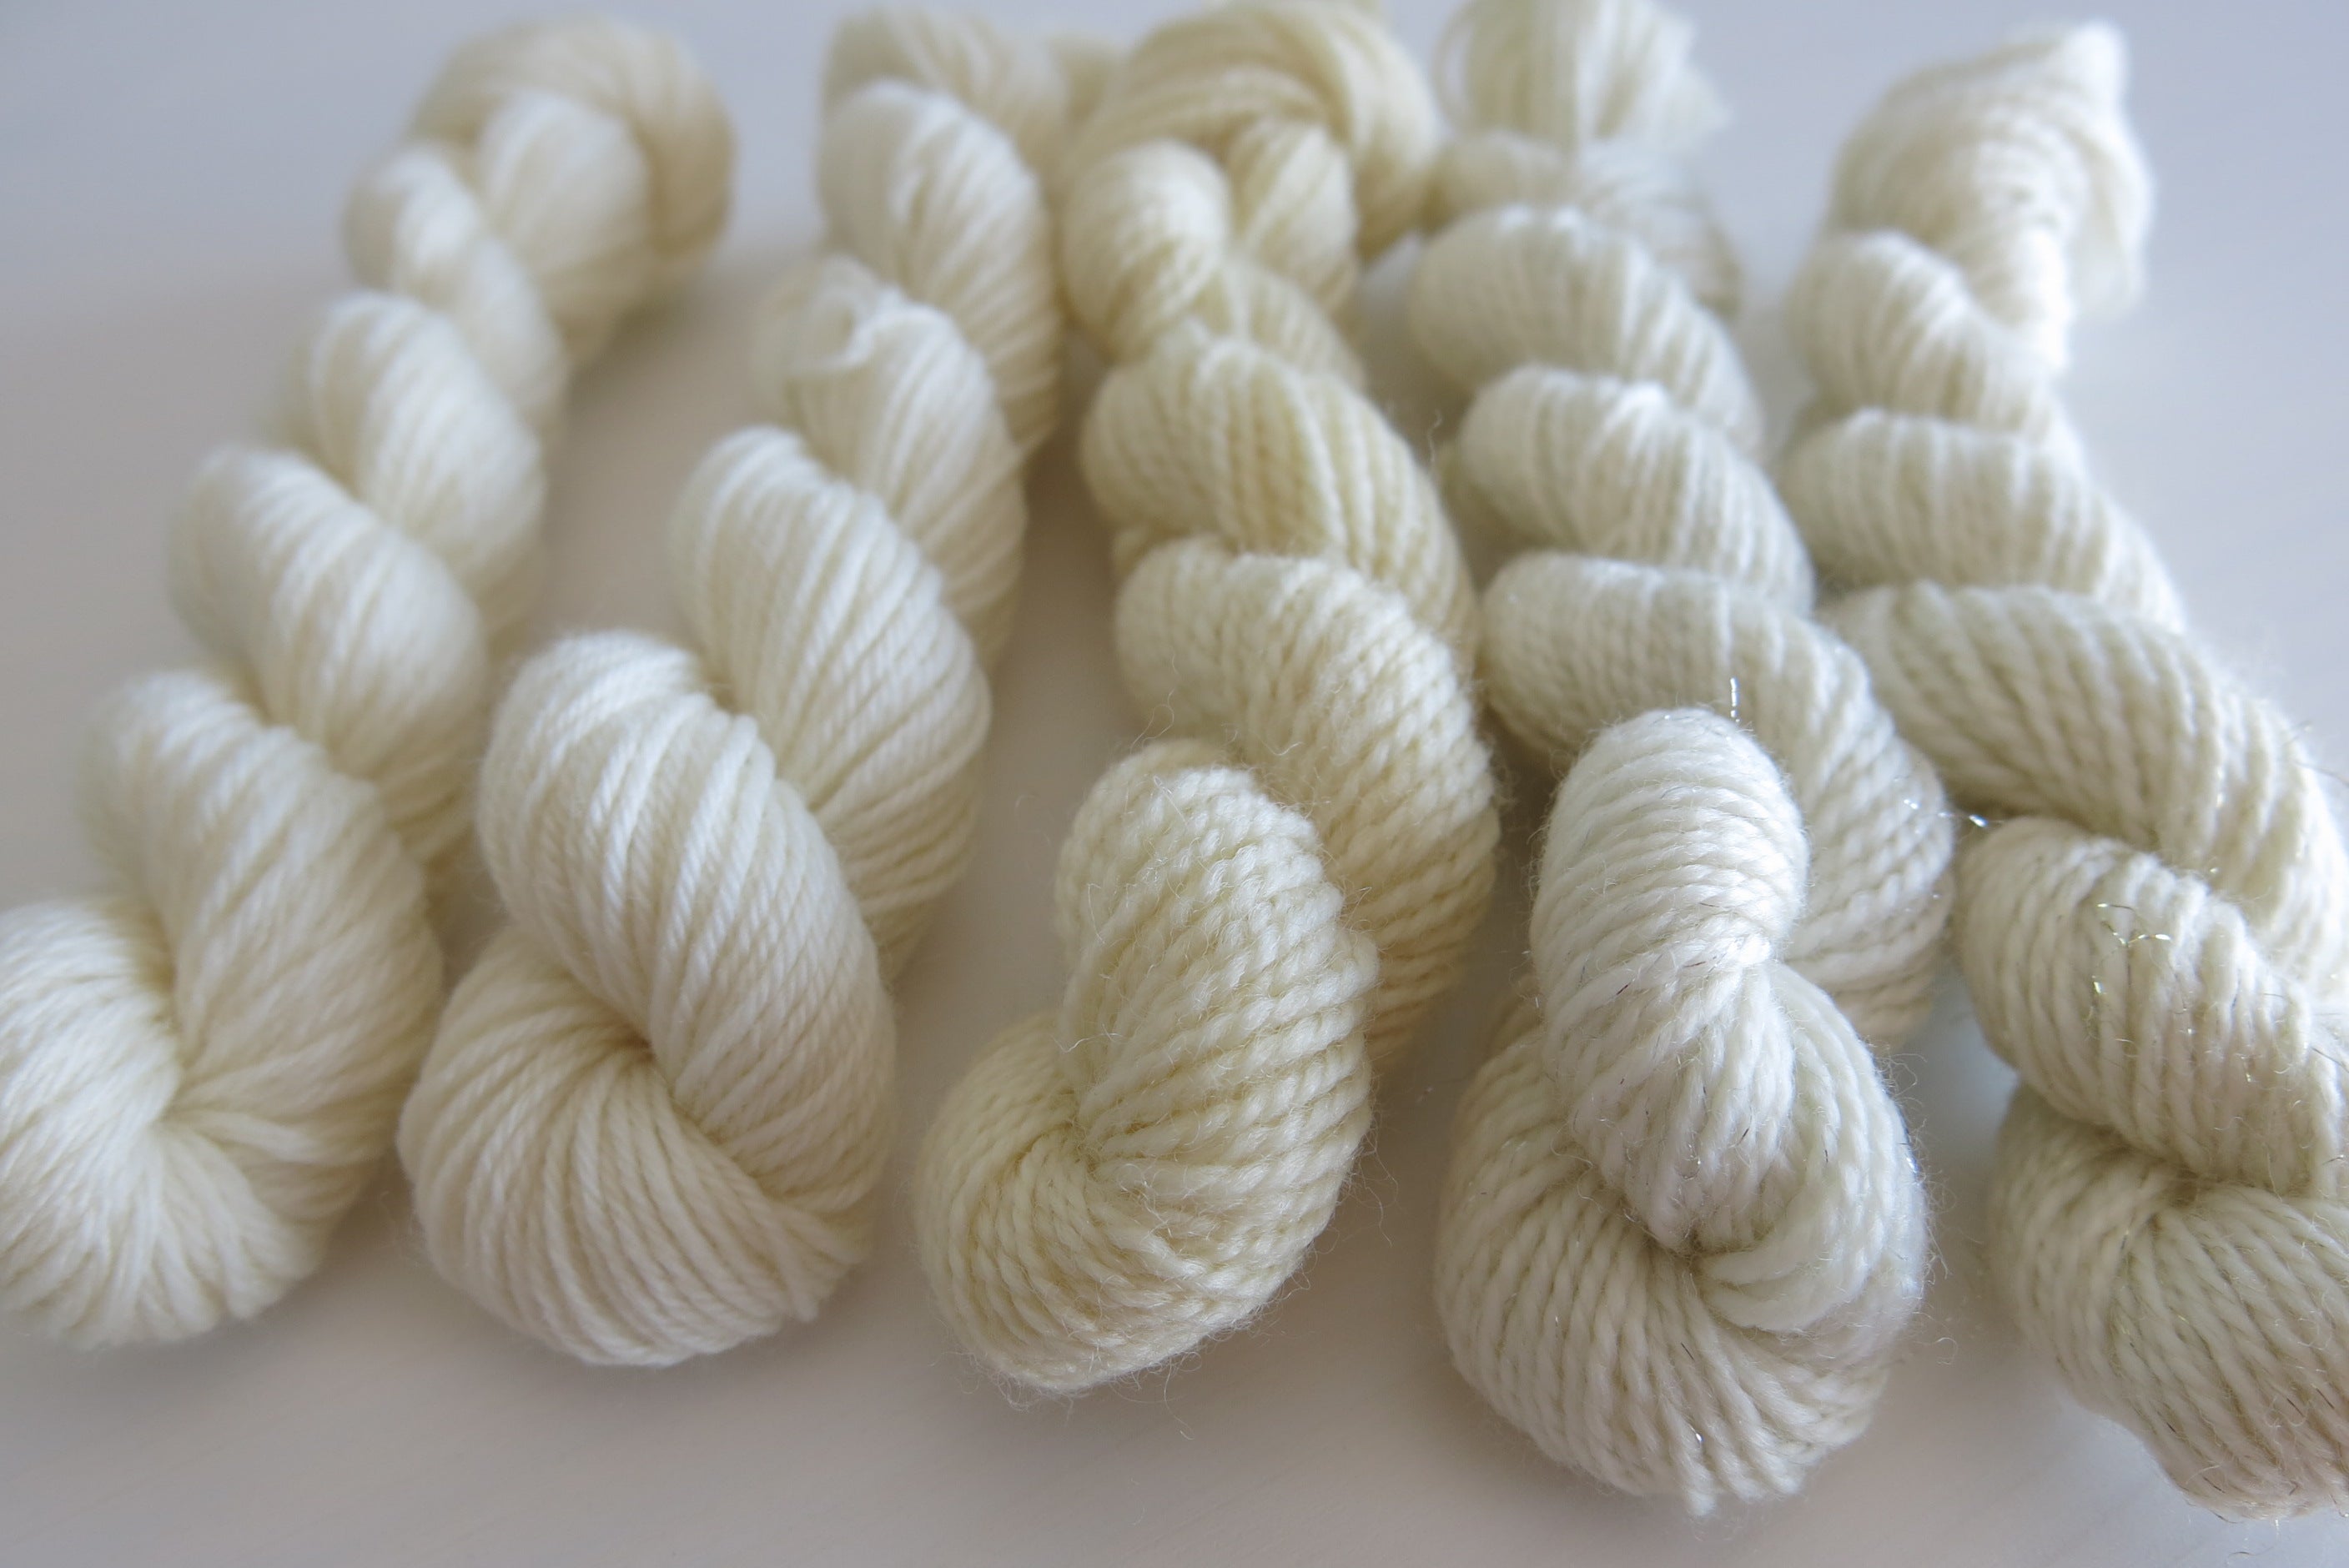 undyed ecru sock yarn mini skeins for knitting